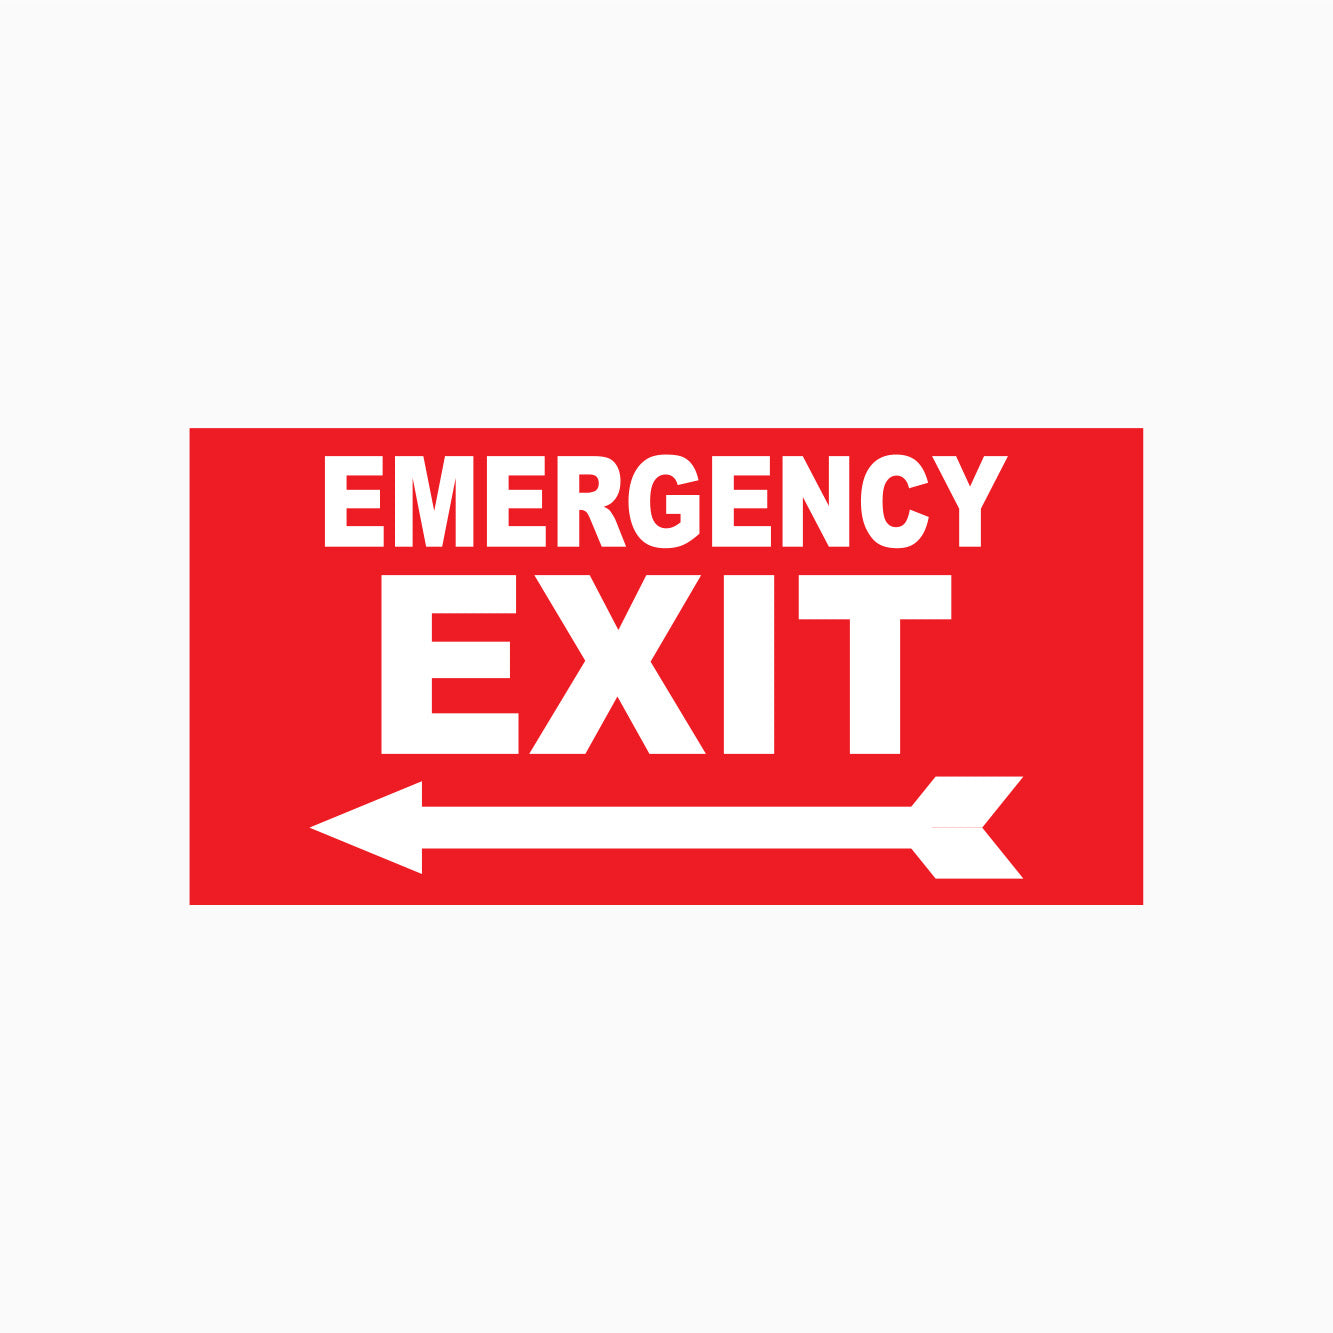 EMERGENCY EXIT SIGN - LEFT ARROW